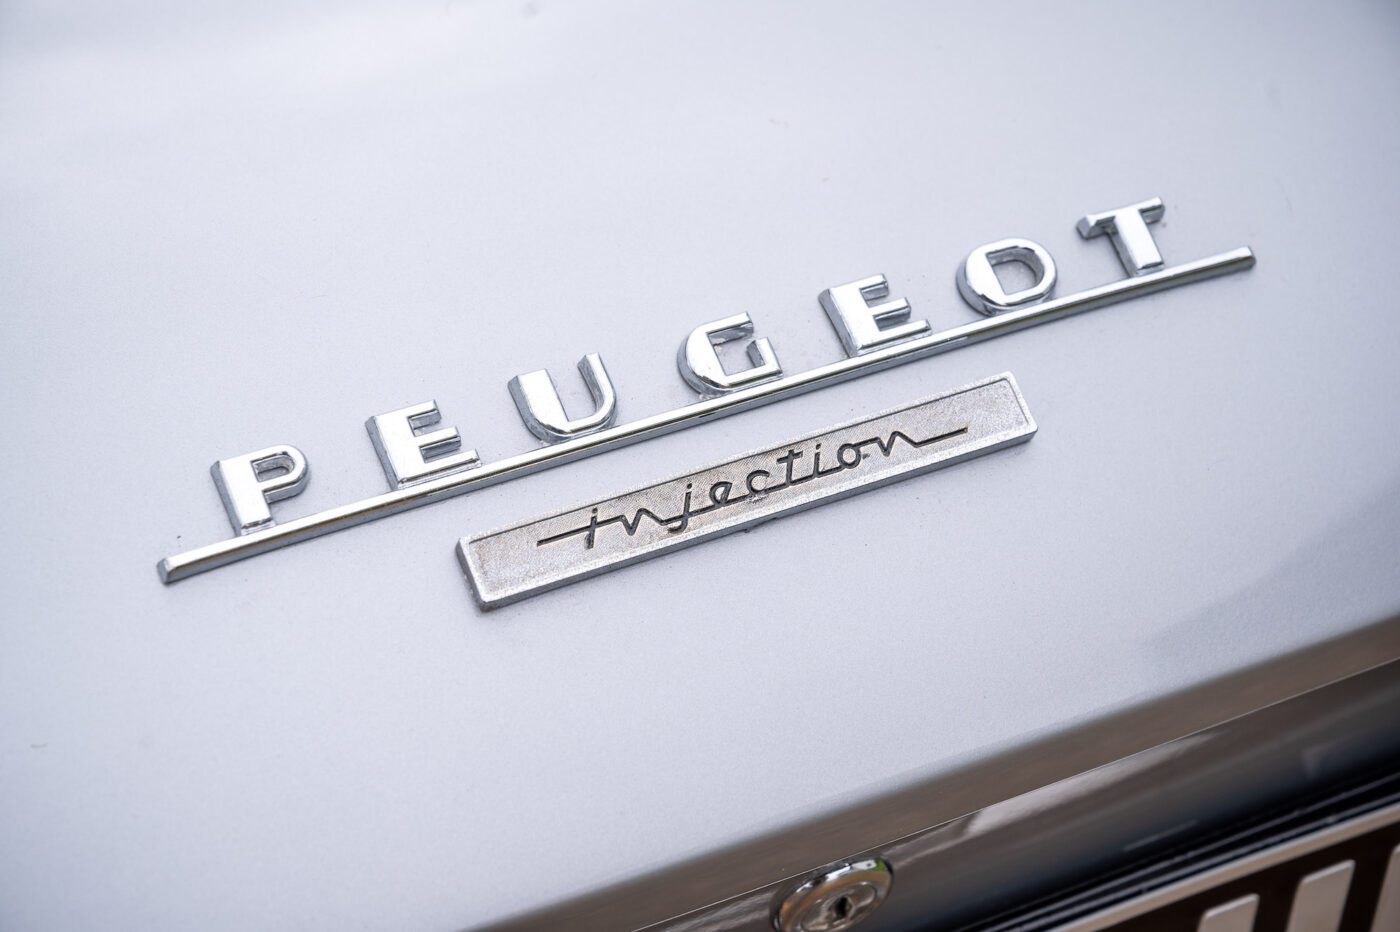 Peugeot 504 Cabriolet injection badge